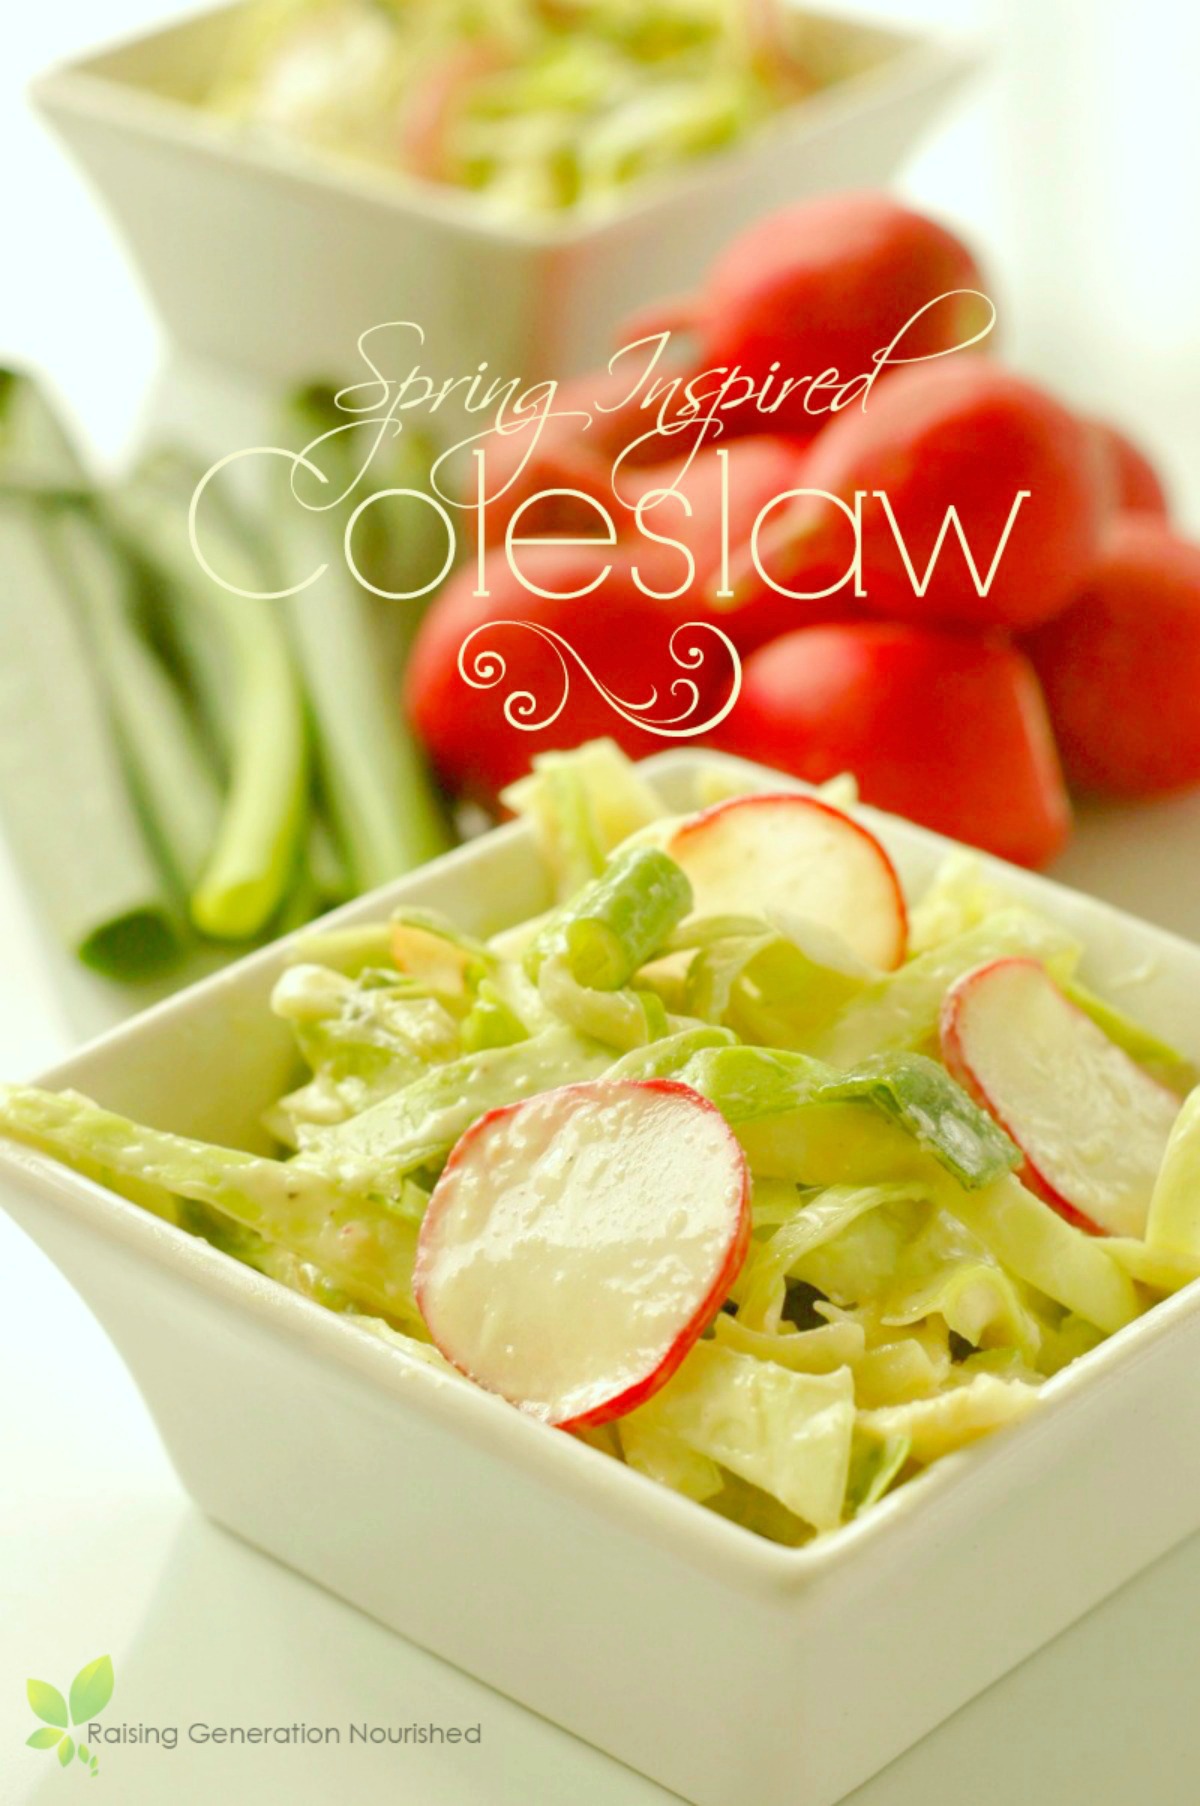 Spring Inspired Coleslaw